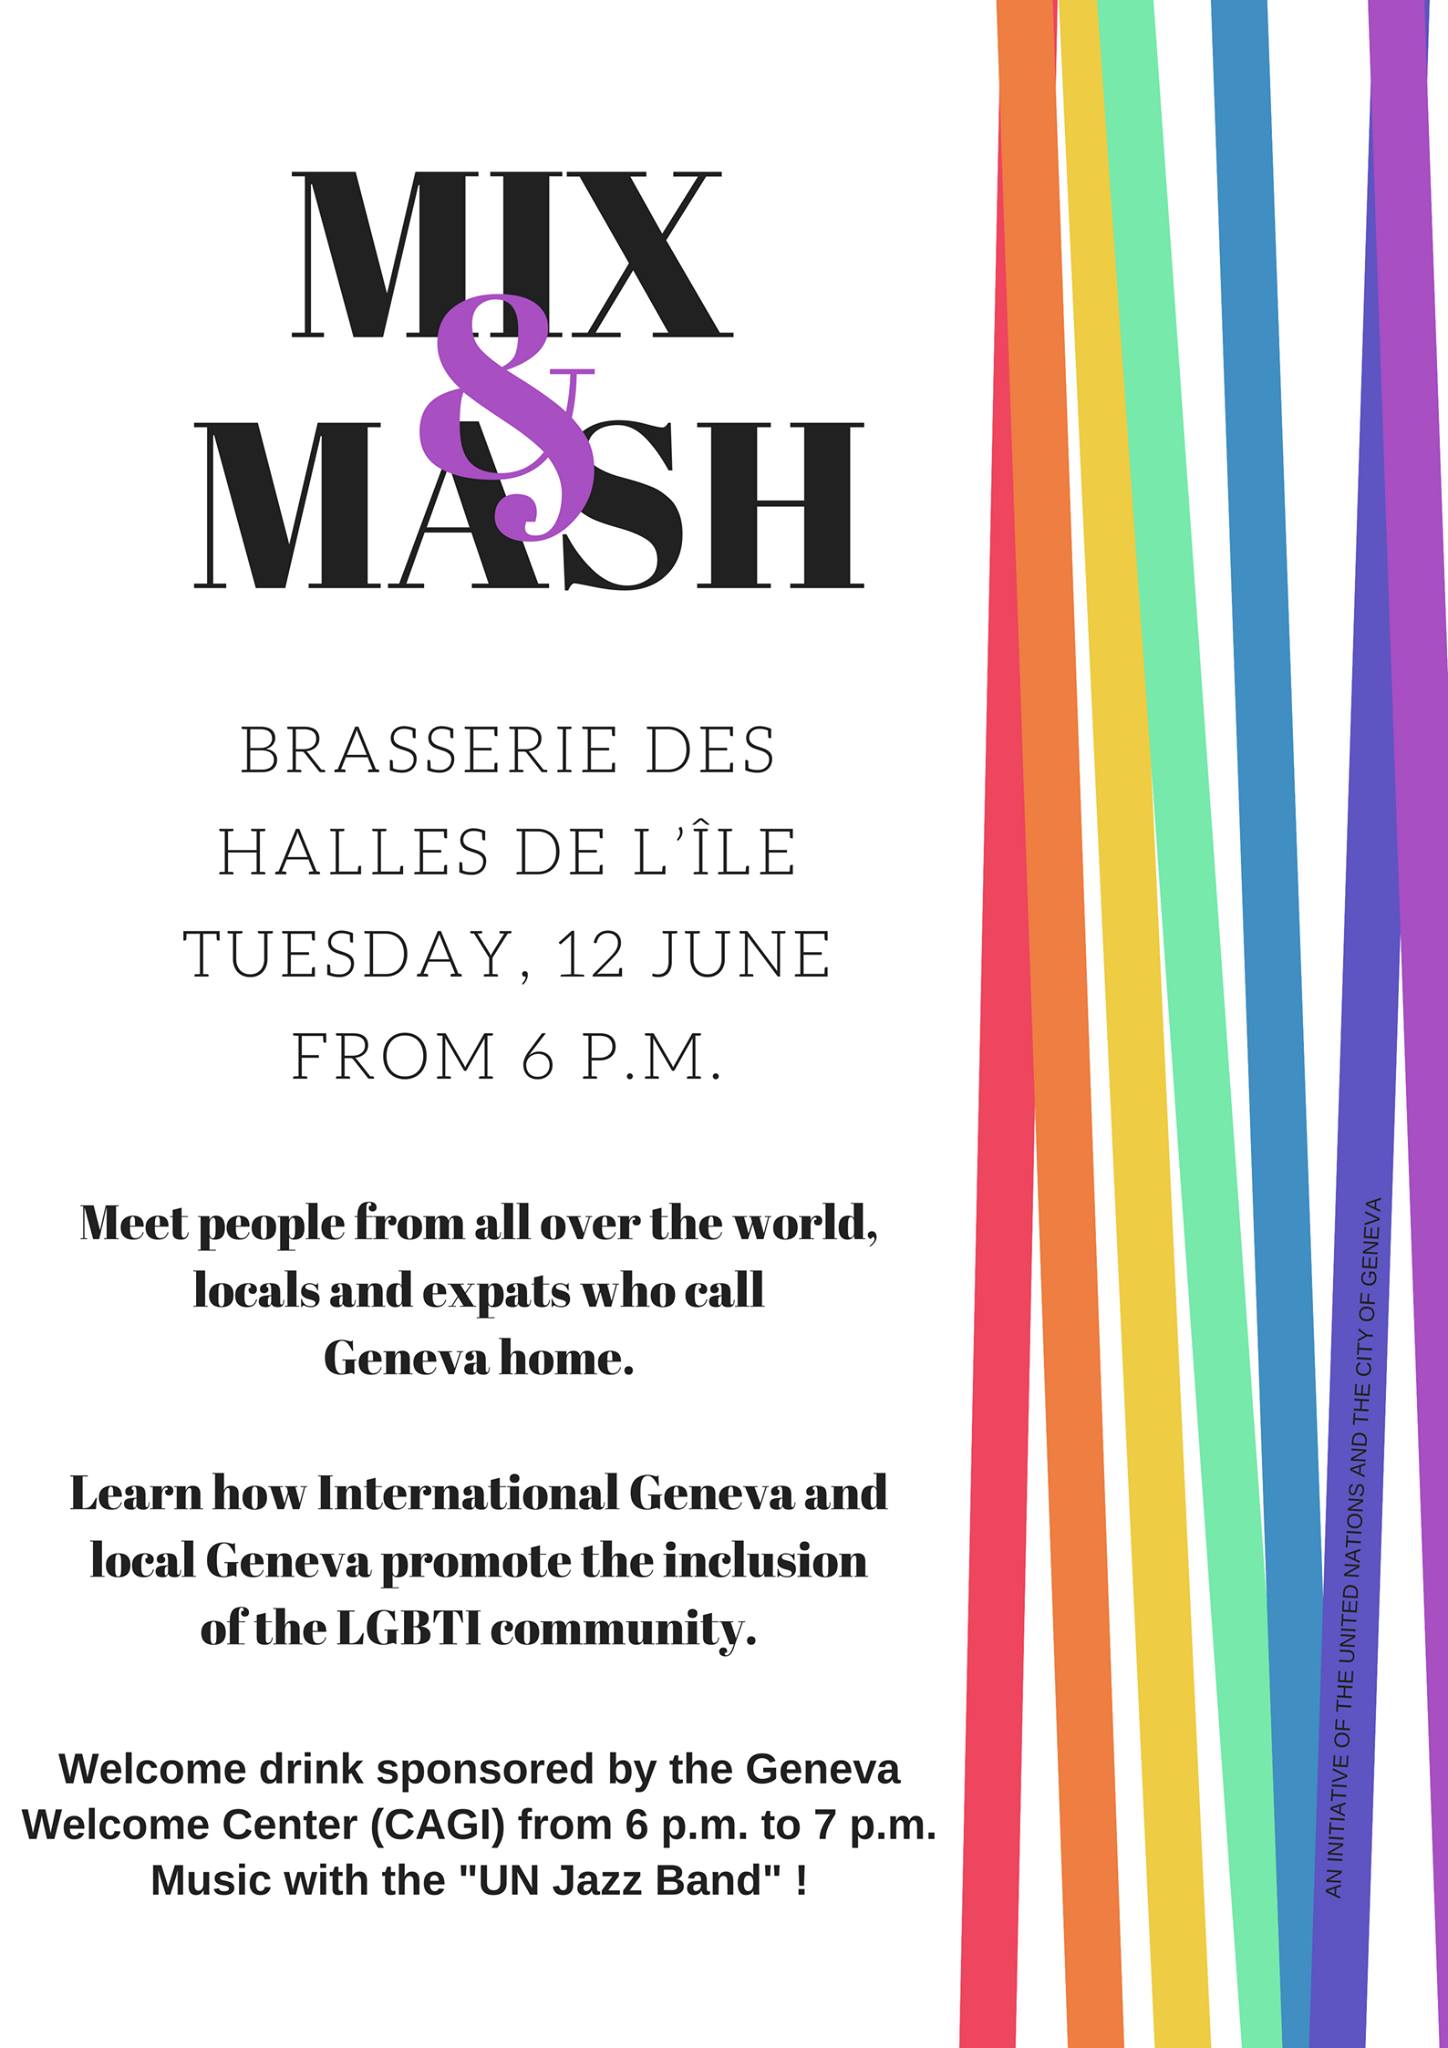 Mix&Mash - Geneva & the inclusion of the LGBTI community